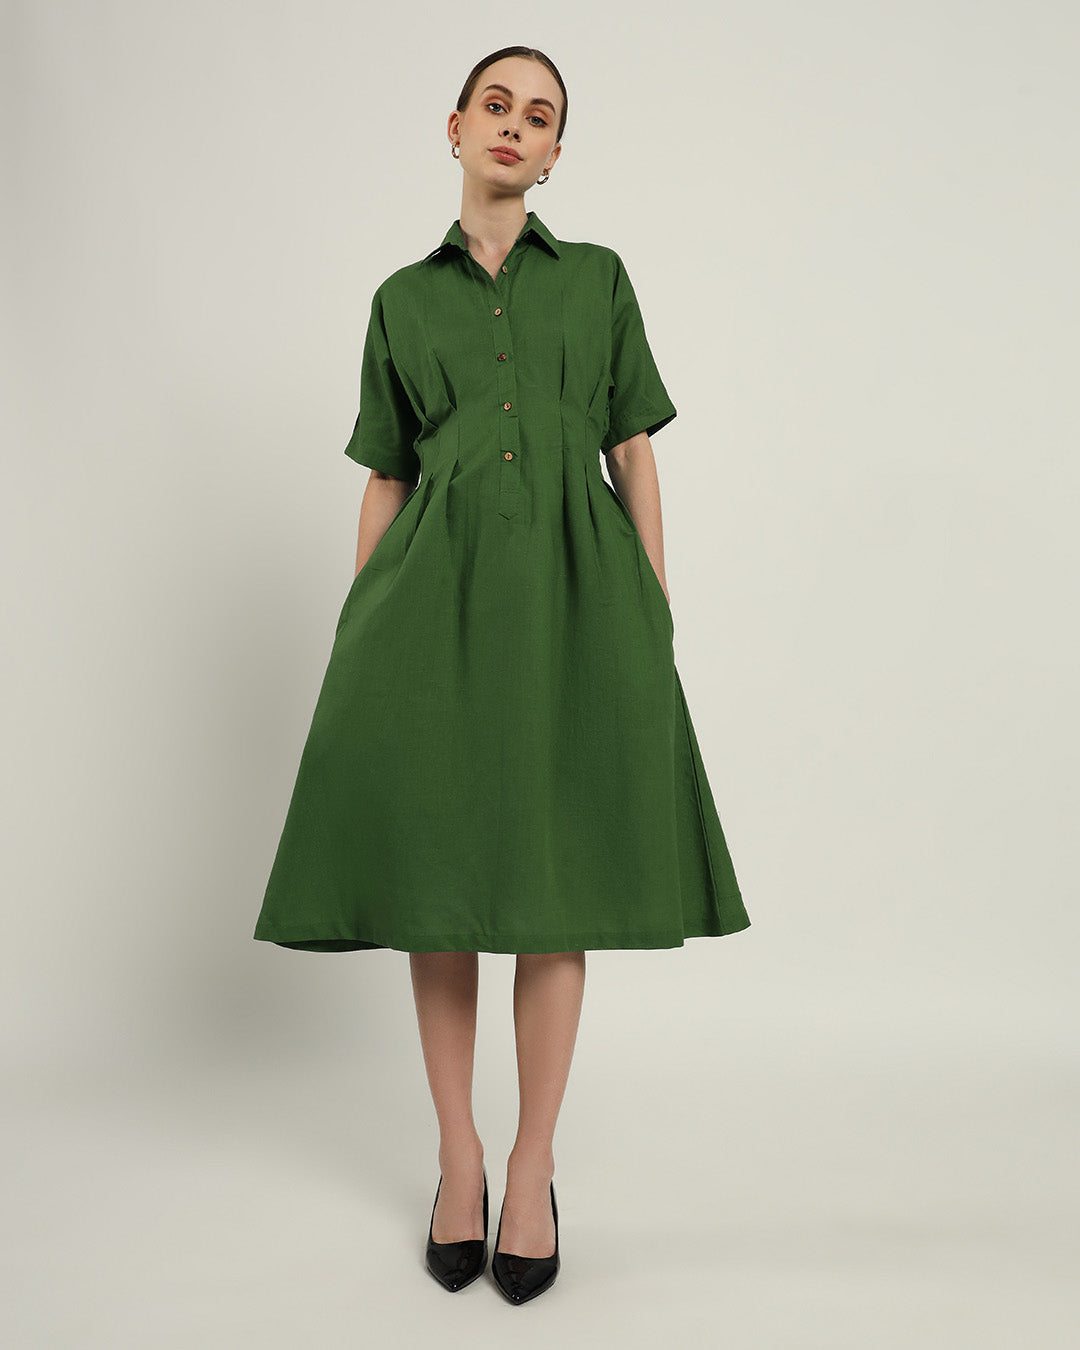 The Salford Emerald Cotton Dress